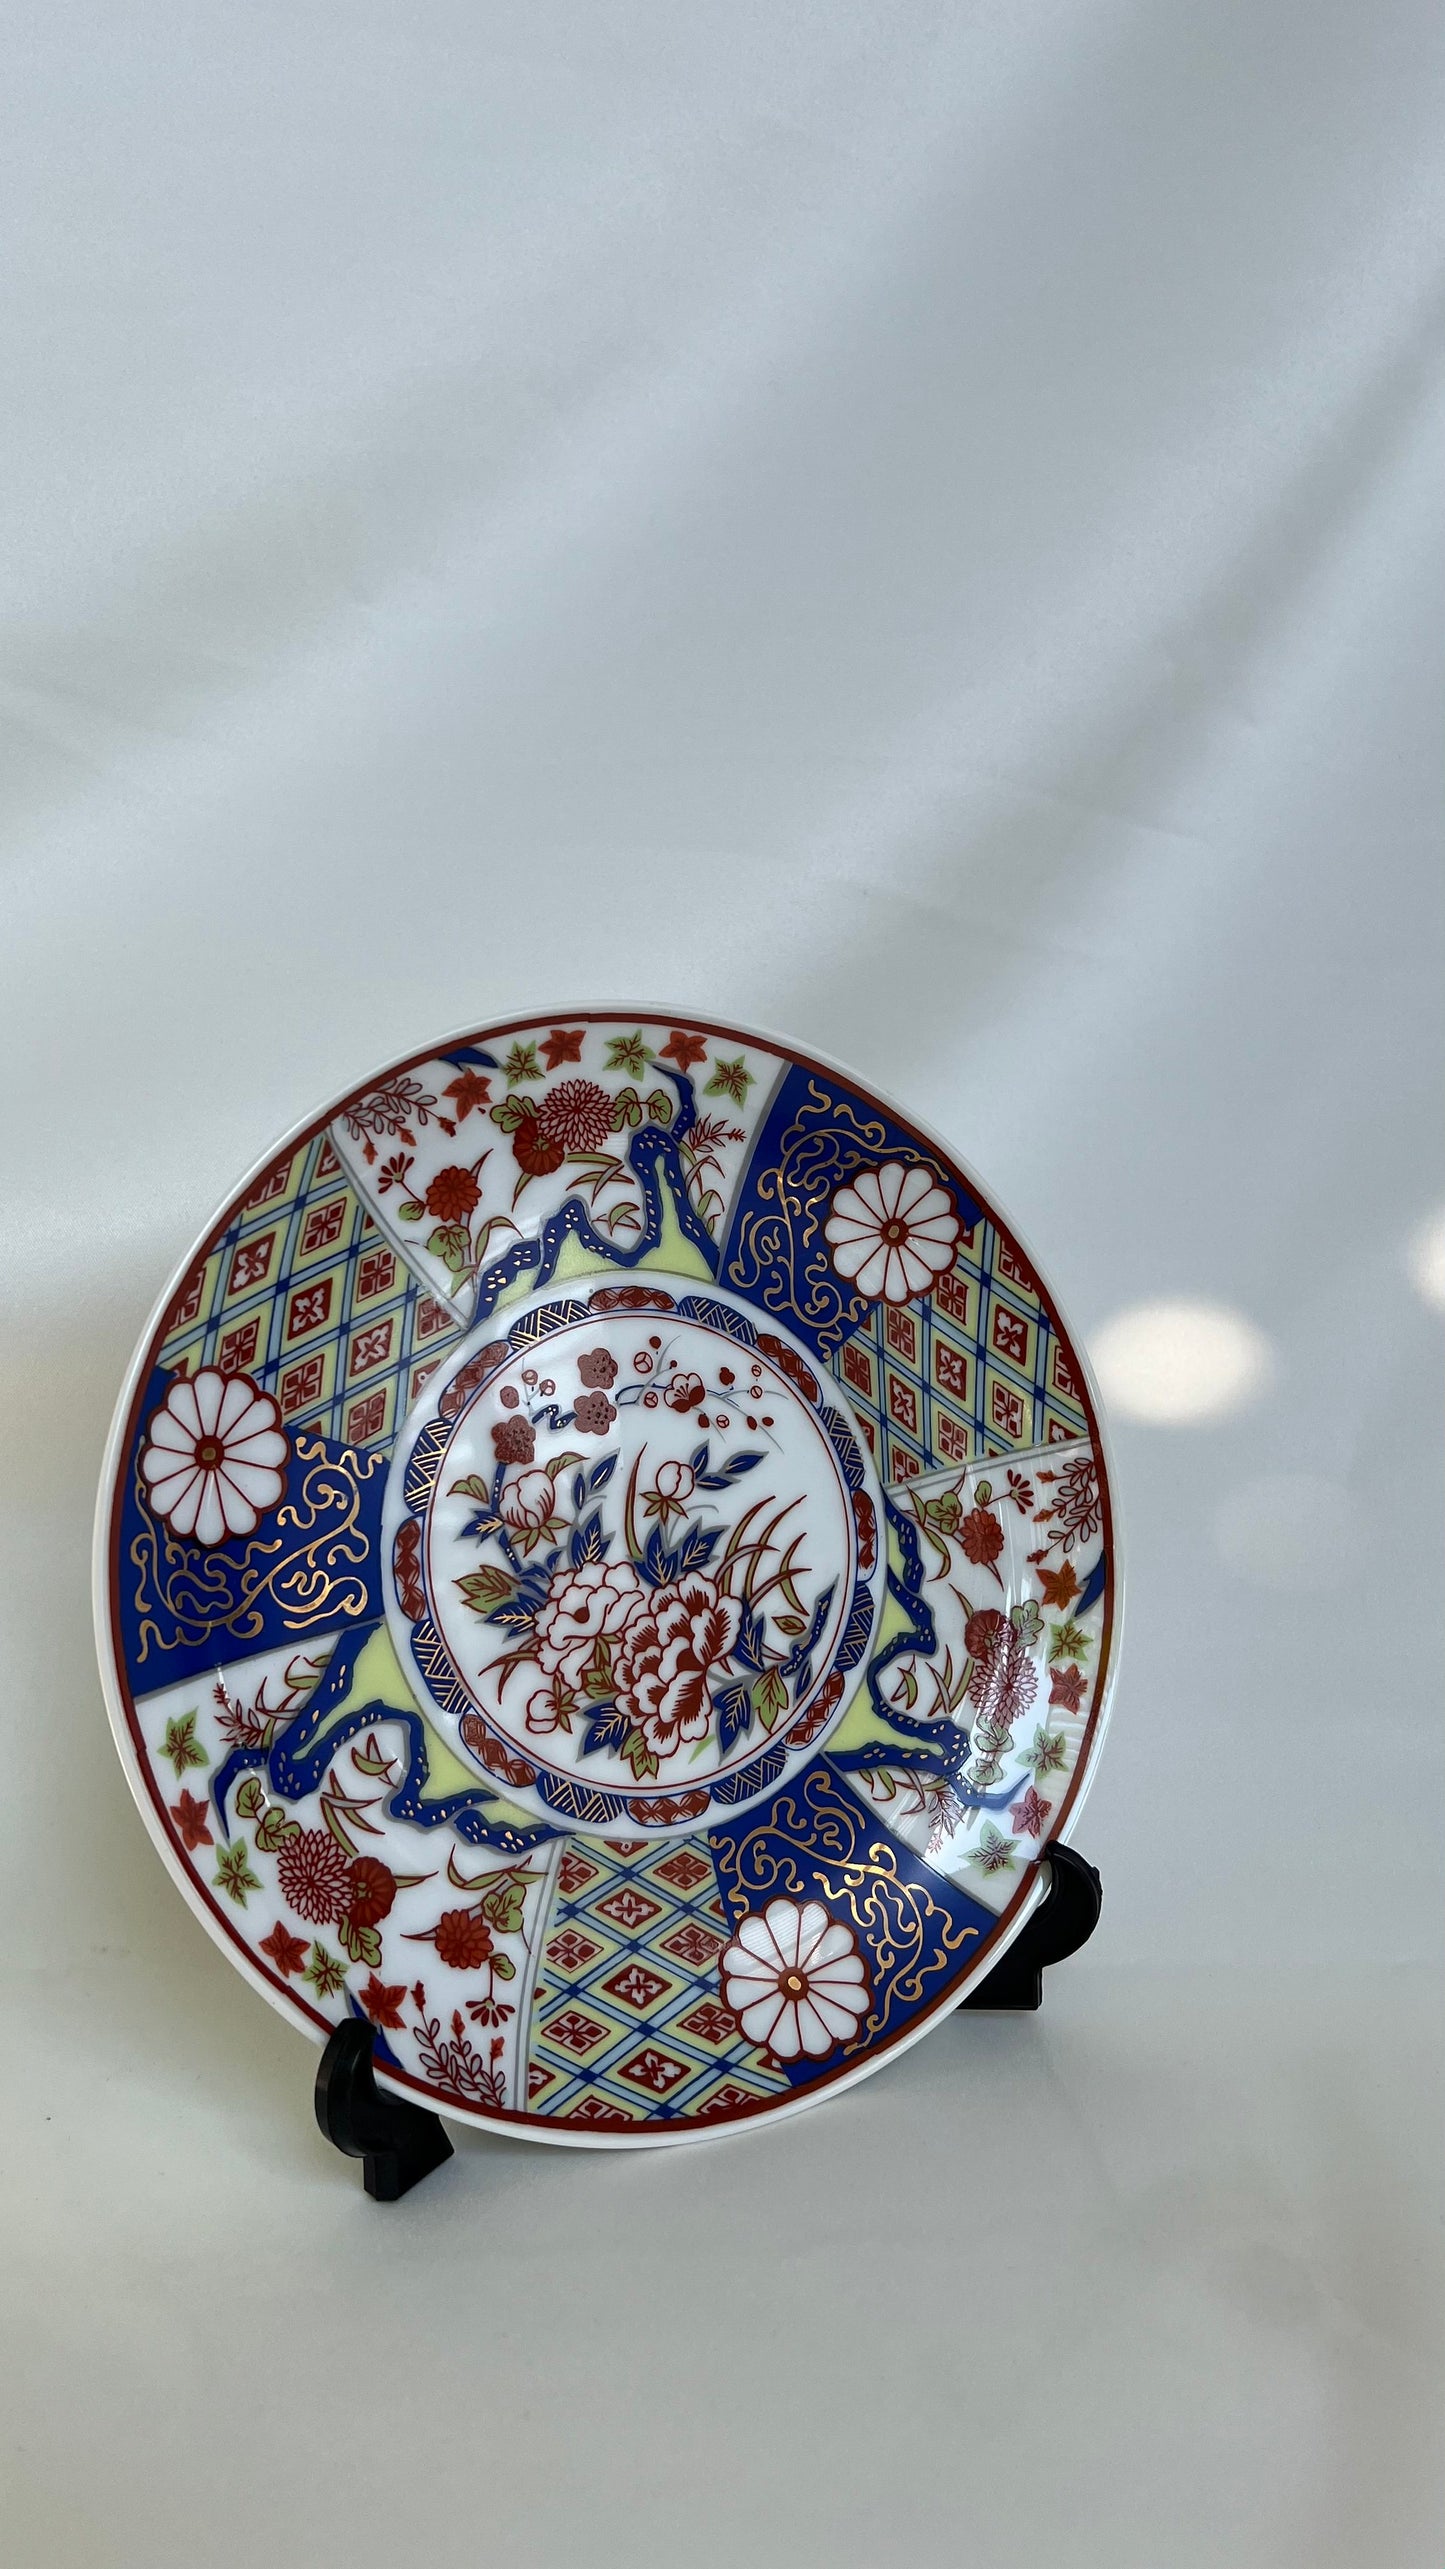 Decorative Plate with Stand | צלחת נוי עם מעמד